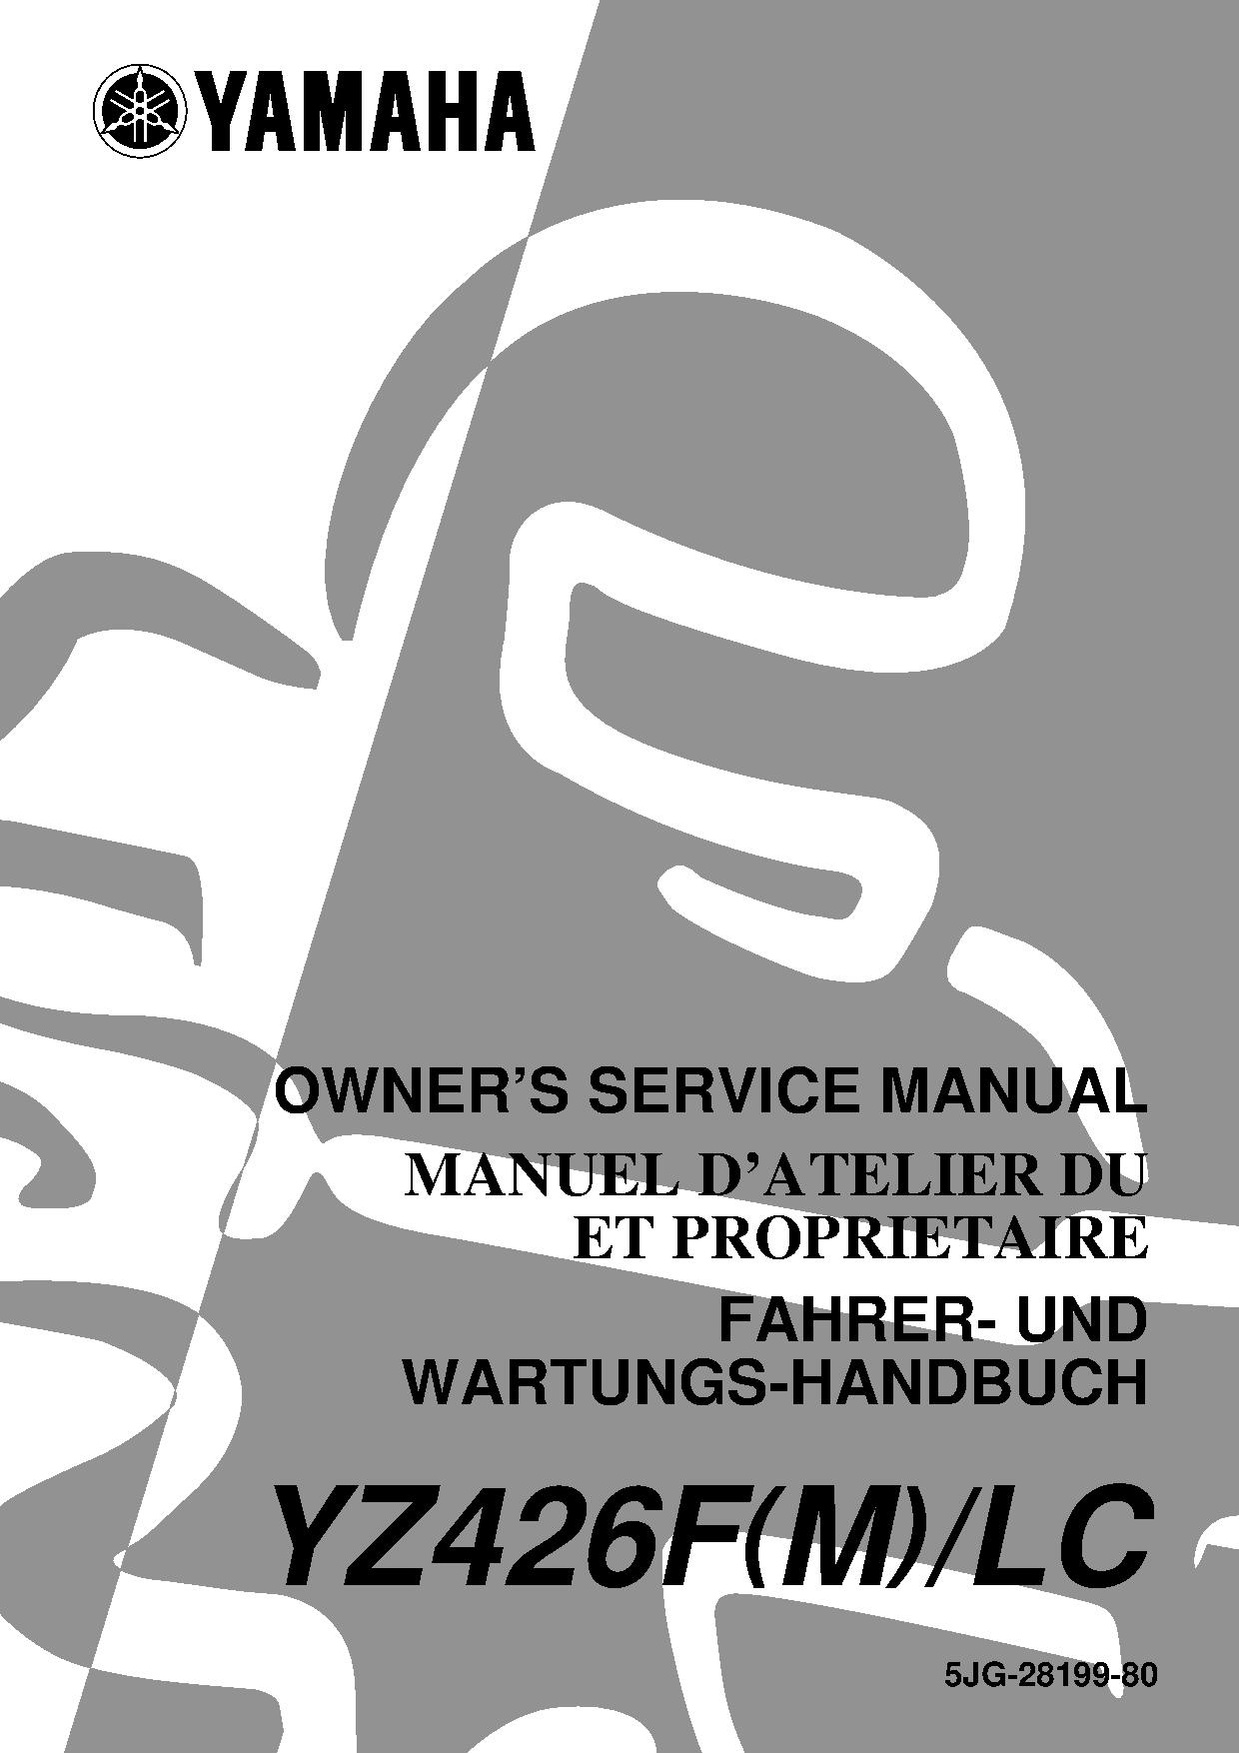 File:2000 Yamaha YZ426F (M) LC Owners Service Manual.pdf